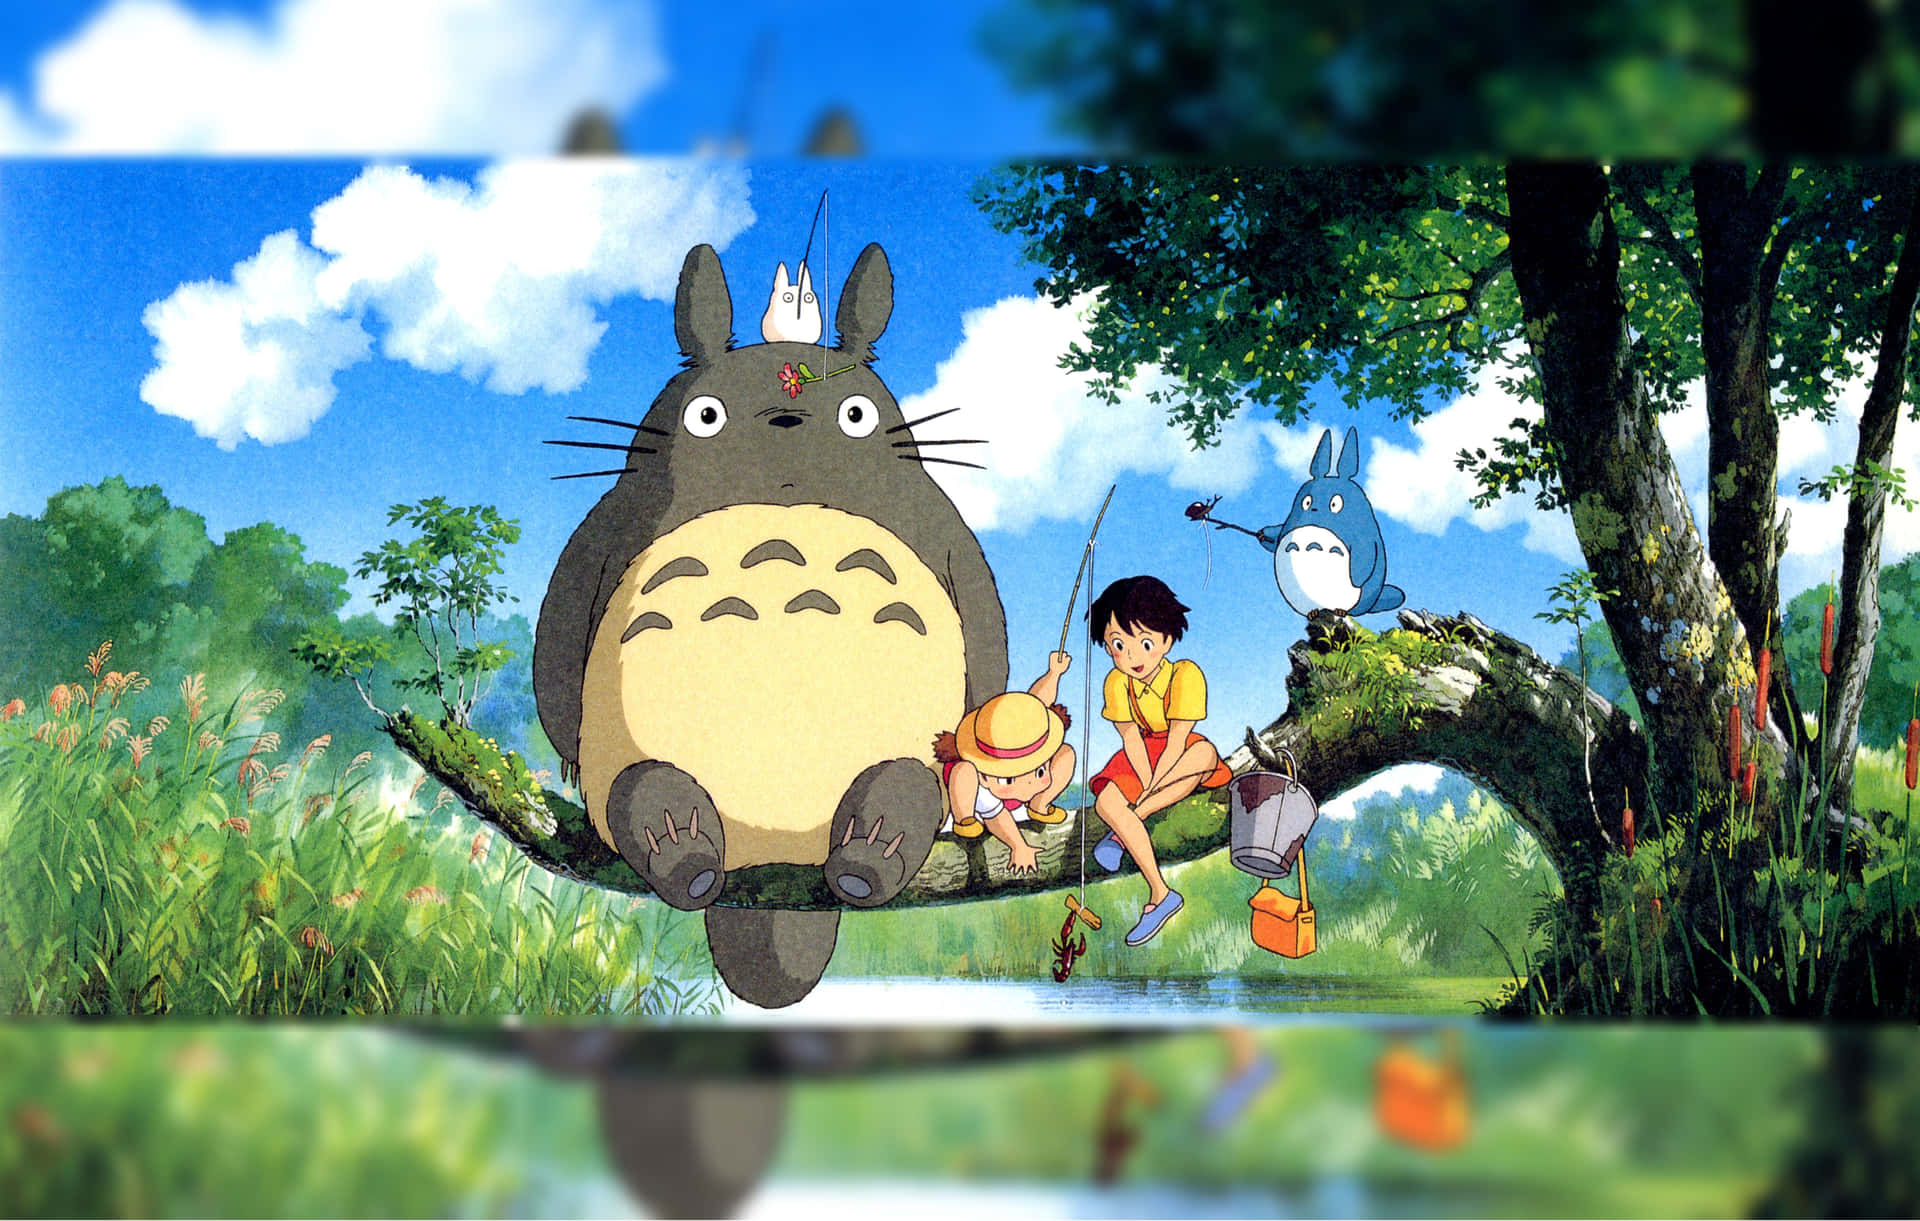 A Closer Look at Totoro